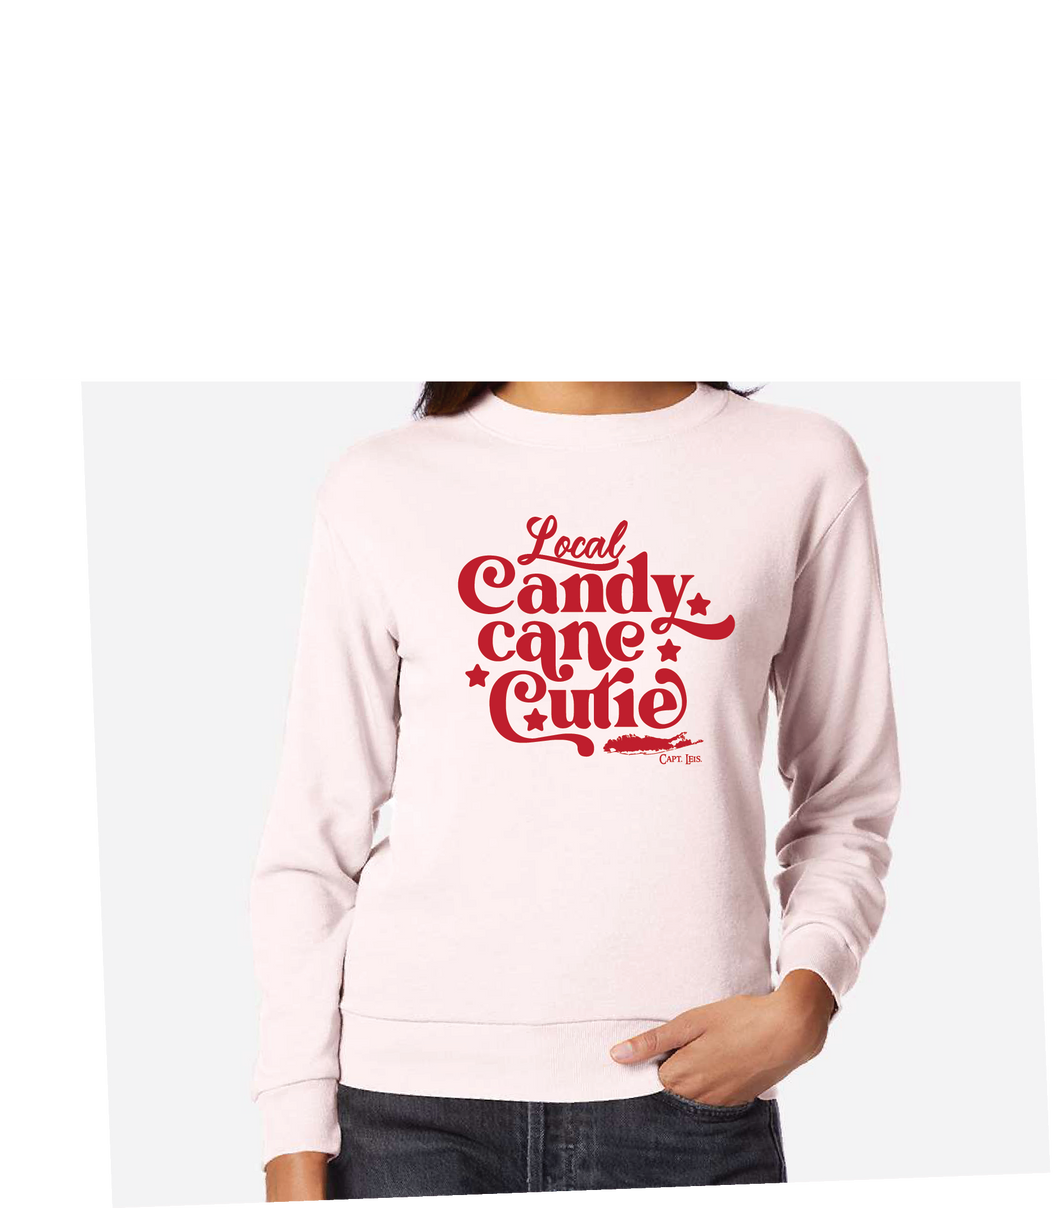 Candy Cane Cutie Ladies Soft Crewneck Pullover